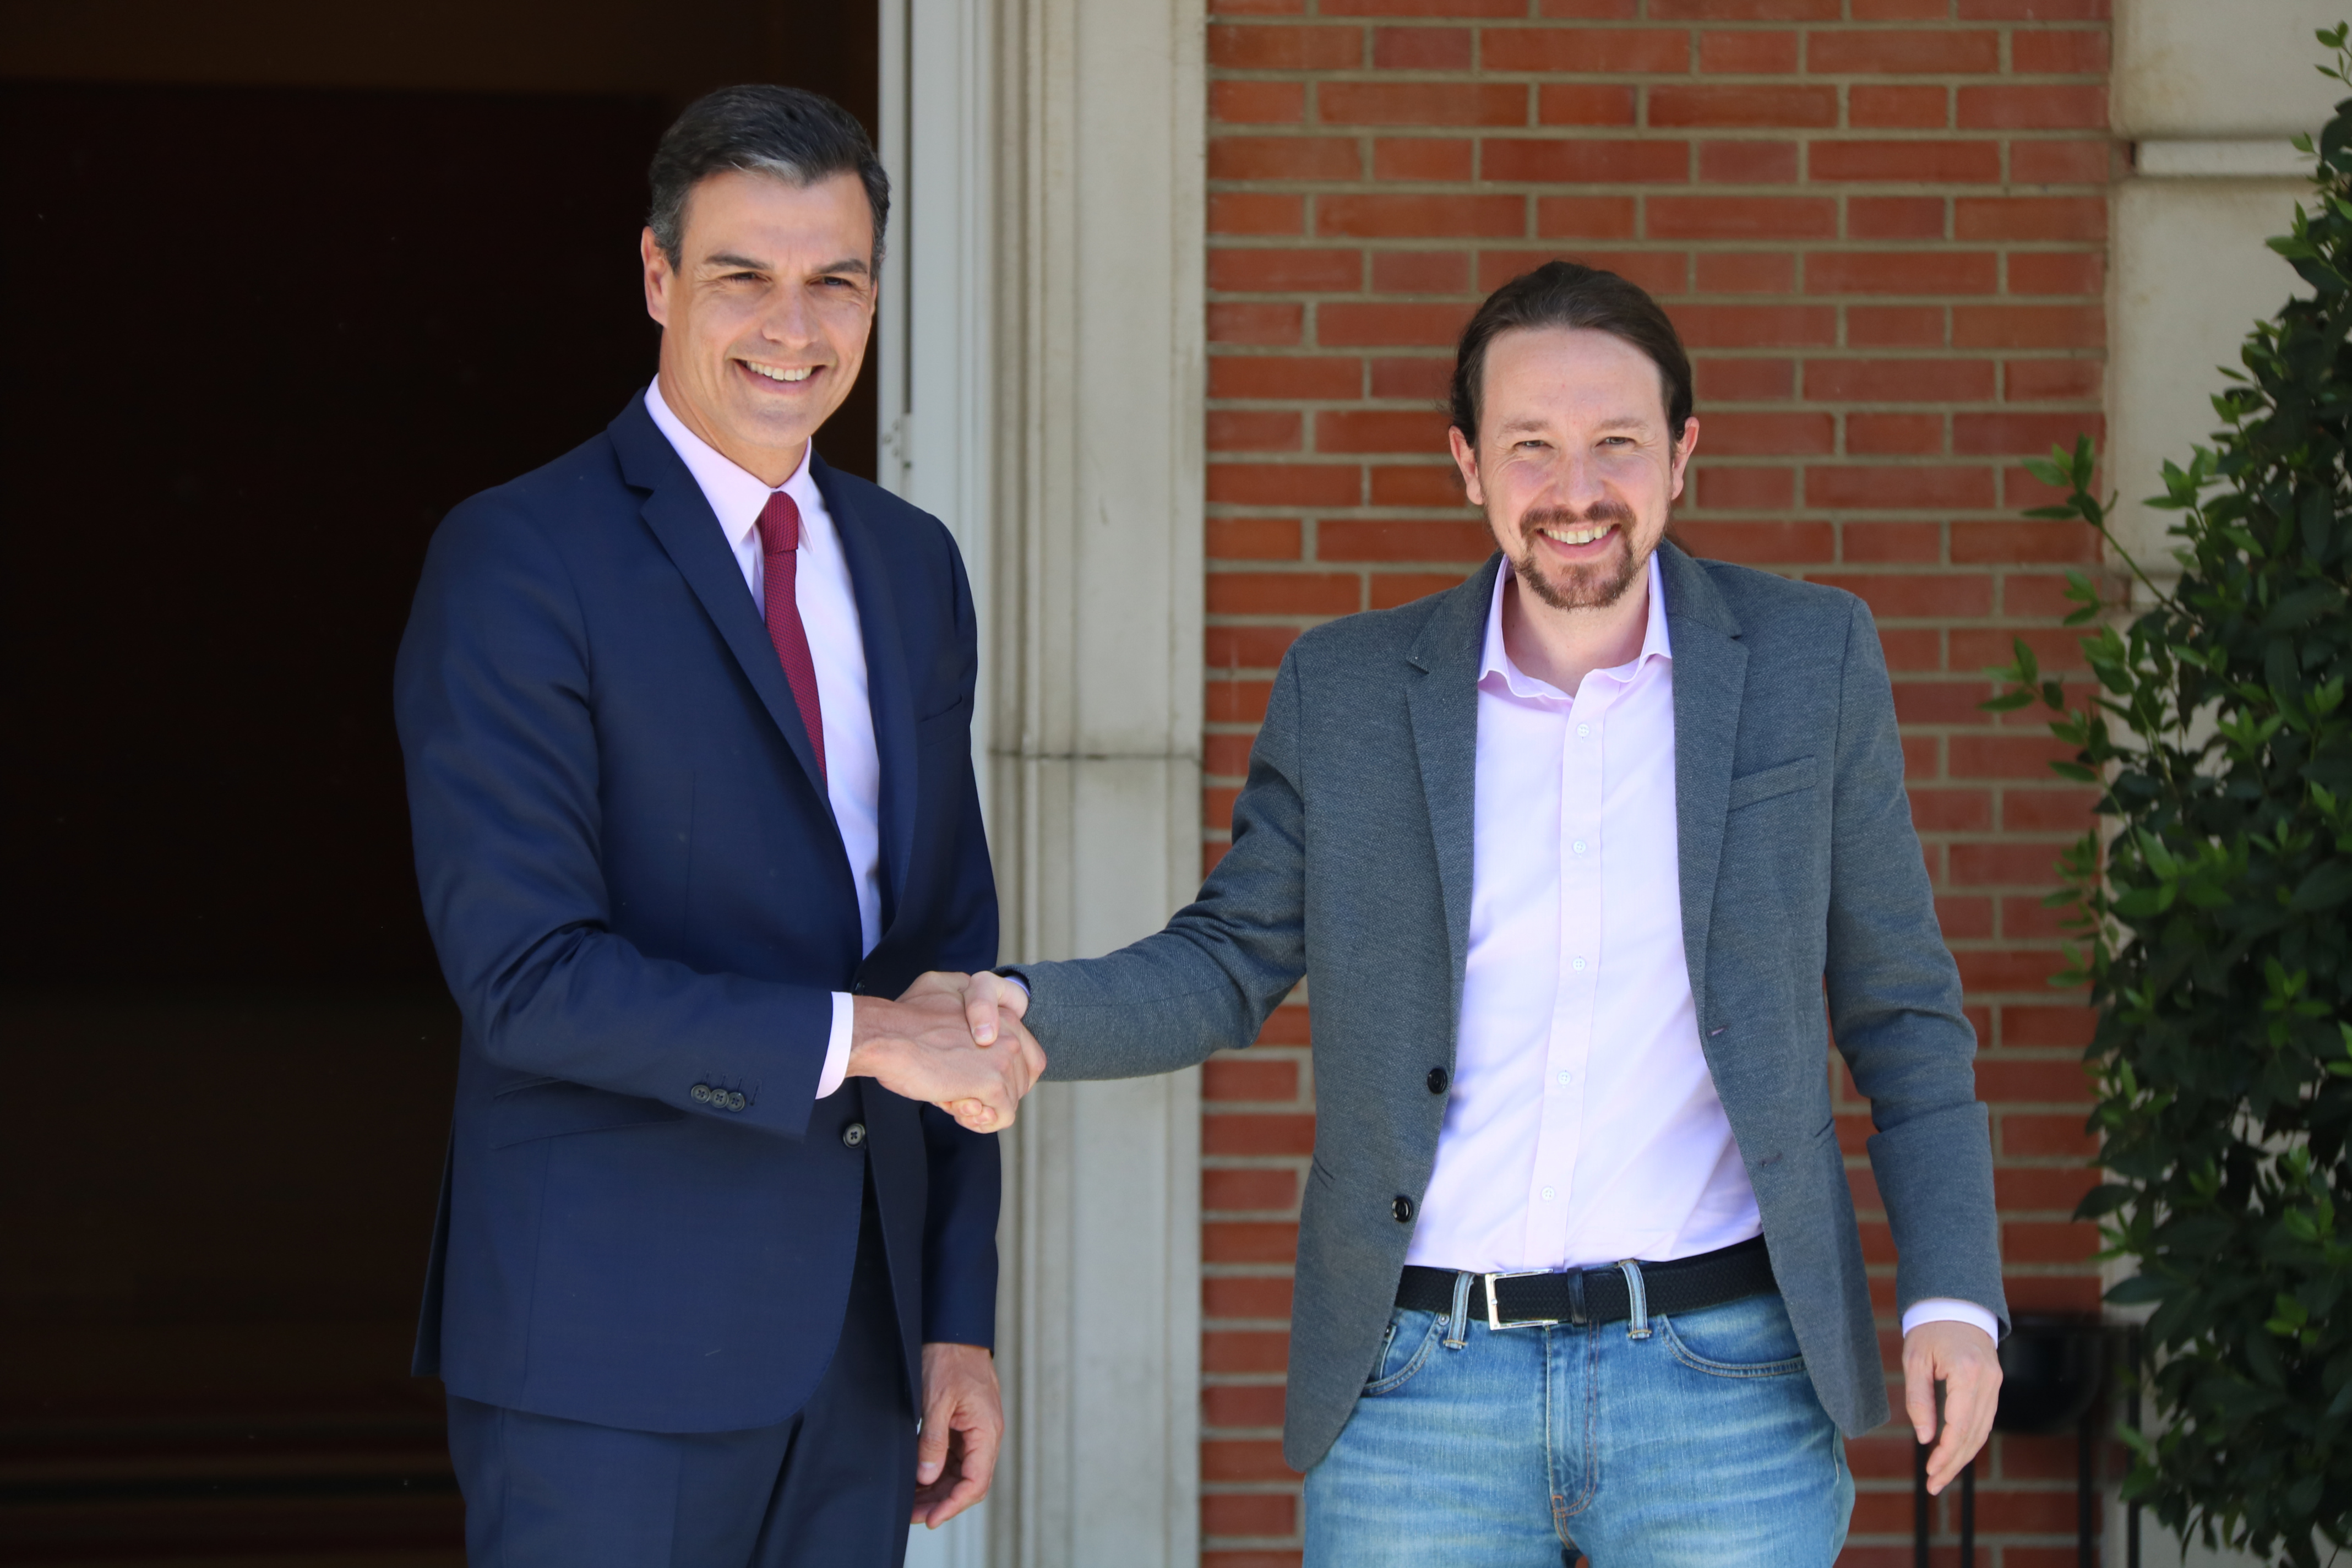 Spanish president Pedro Sánchez and Unidas Podemos leader Pablo Iglesias (by Roger Pi de Cabanyes)